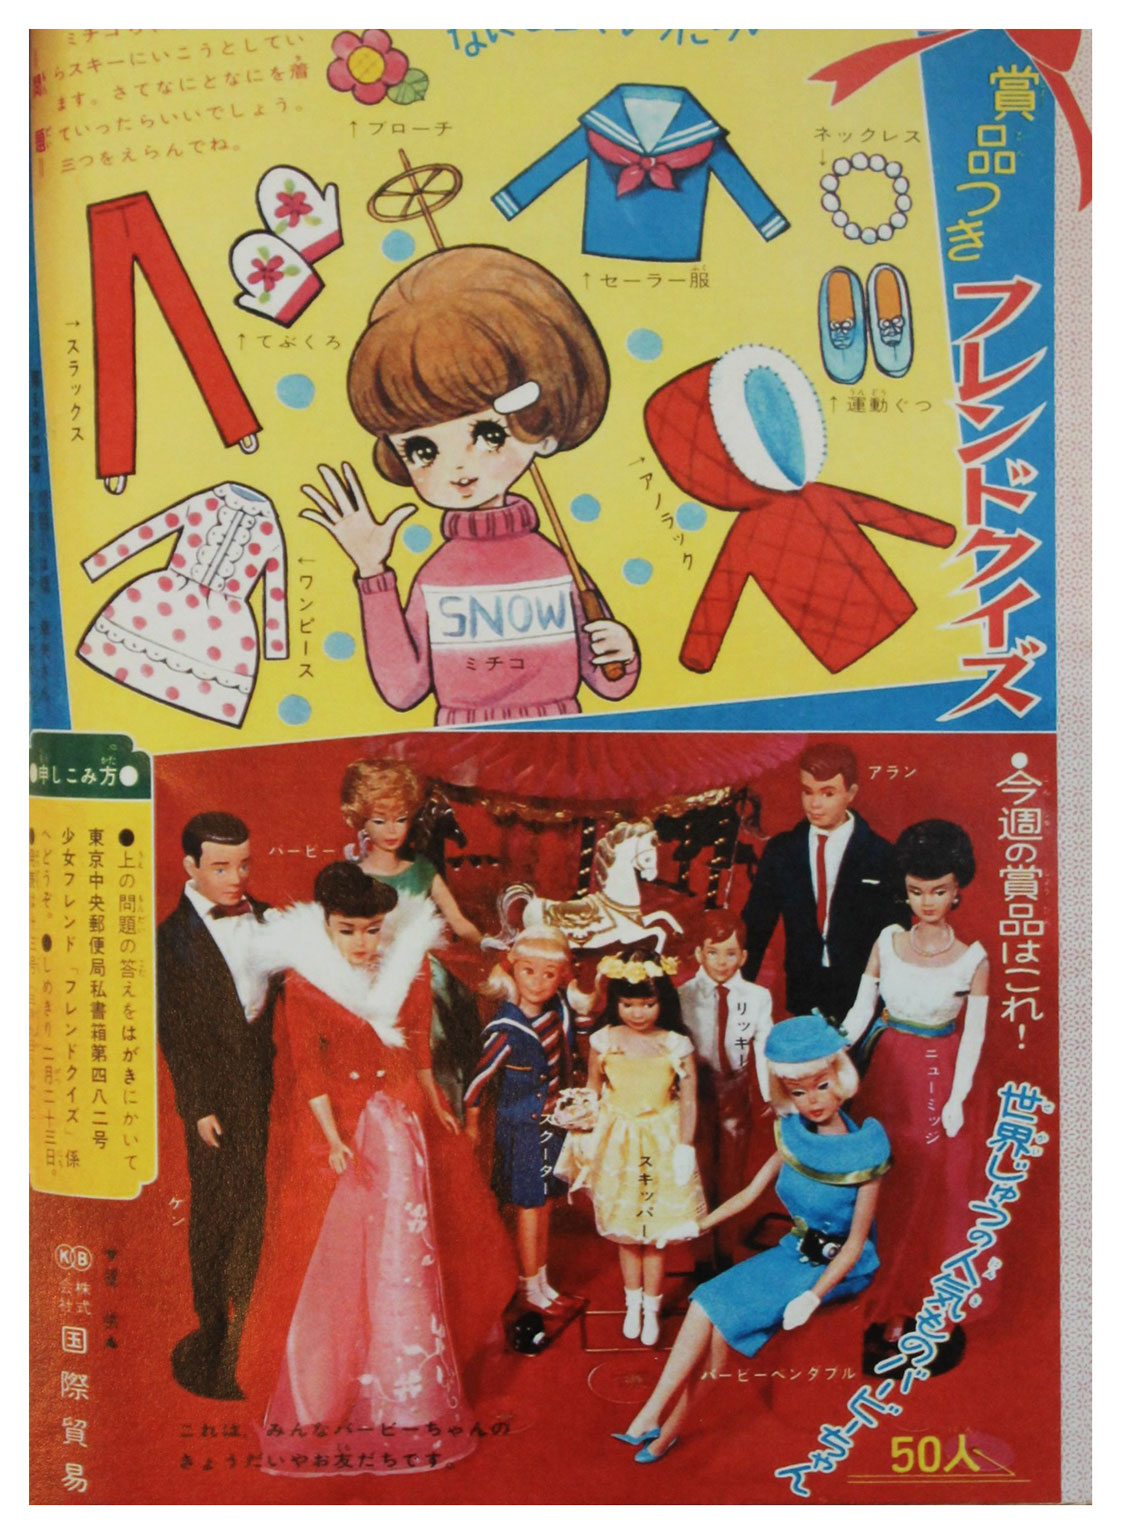 1966 Japanese Friend magazine (8th March)